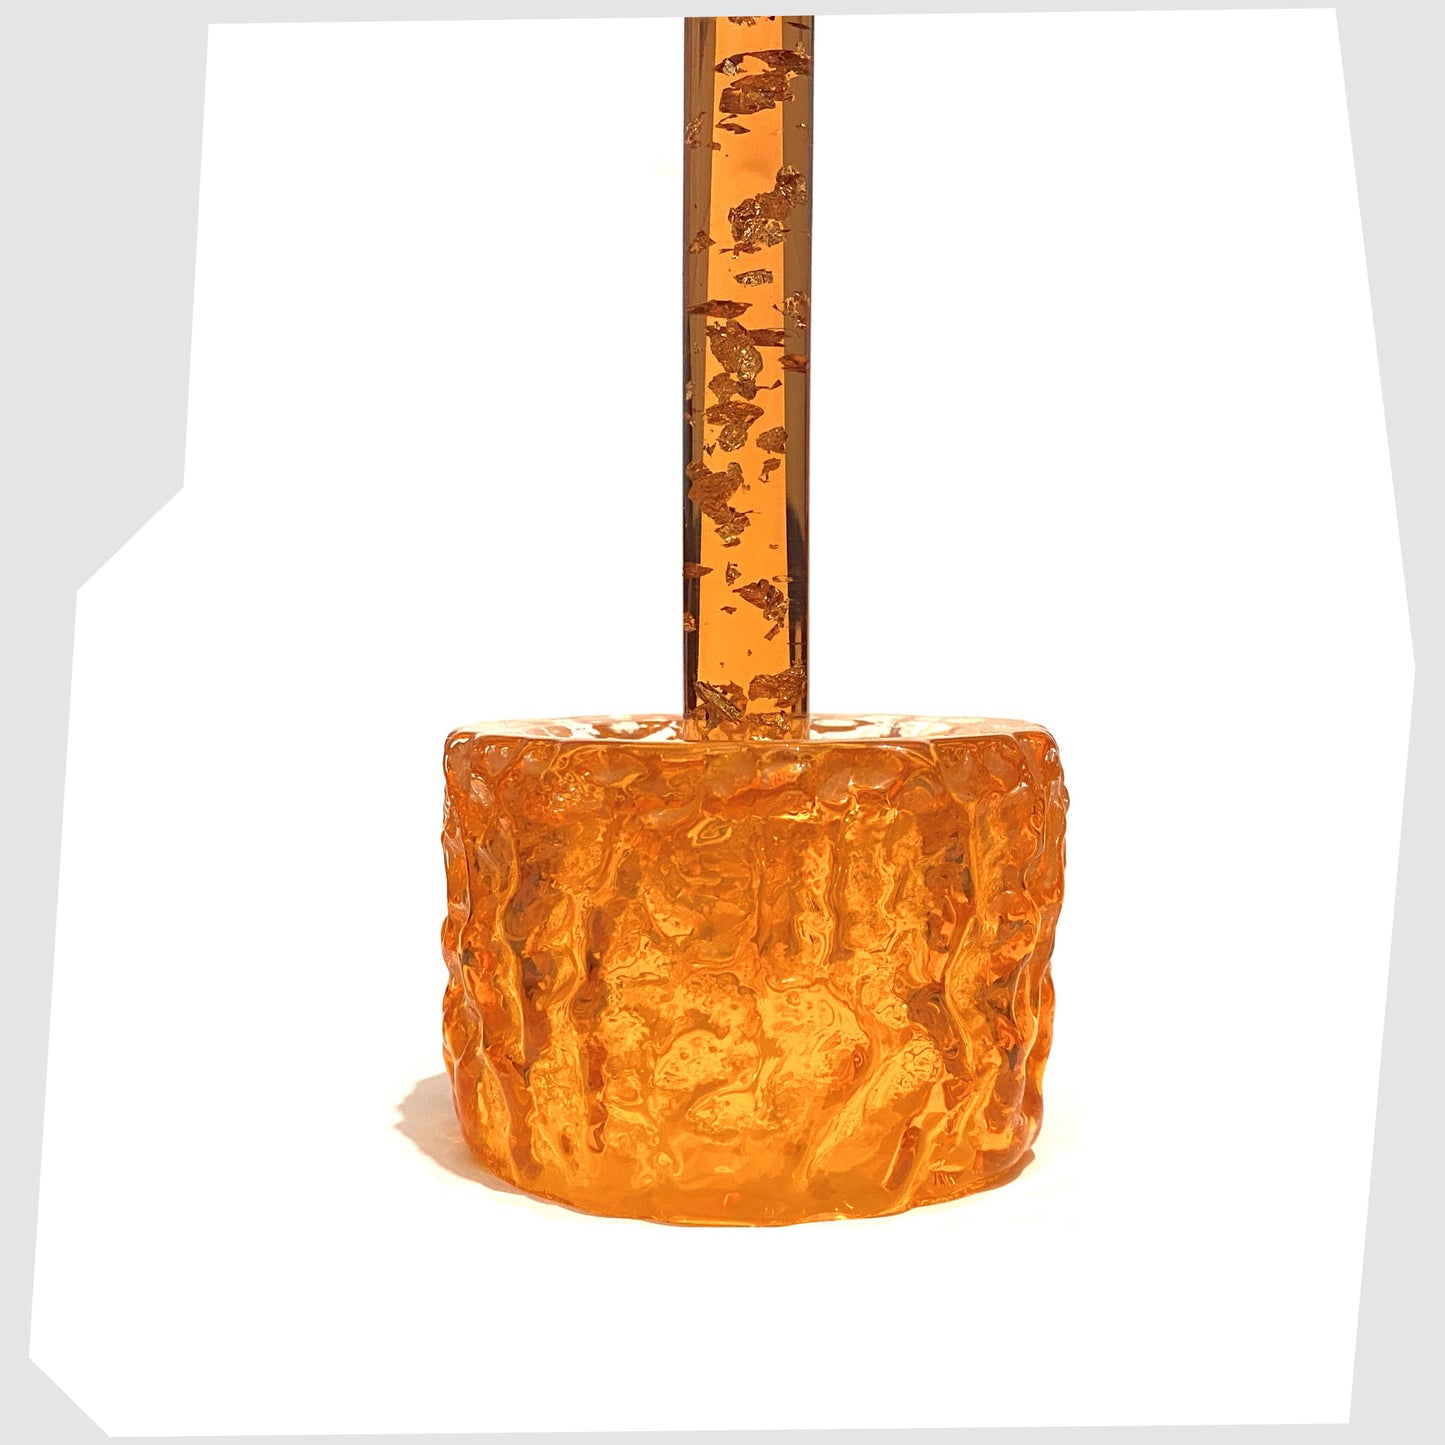 whitefriars-glass-candlestick-holder-in-orange-glass